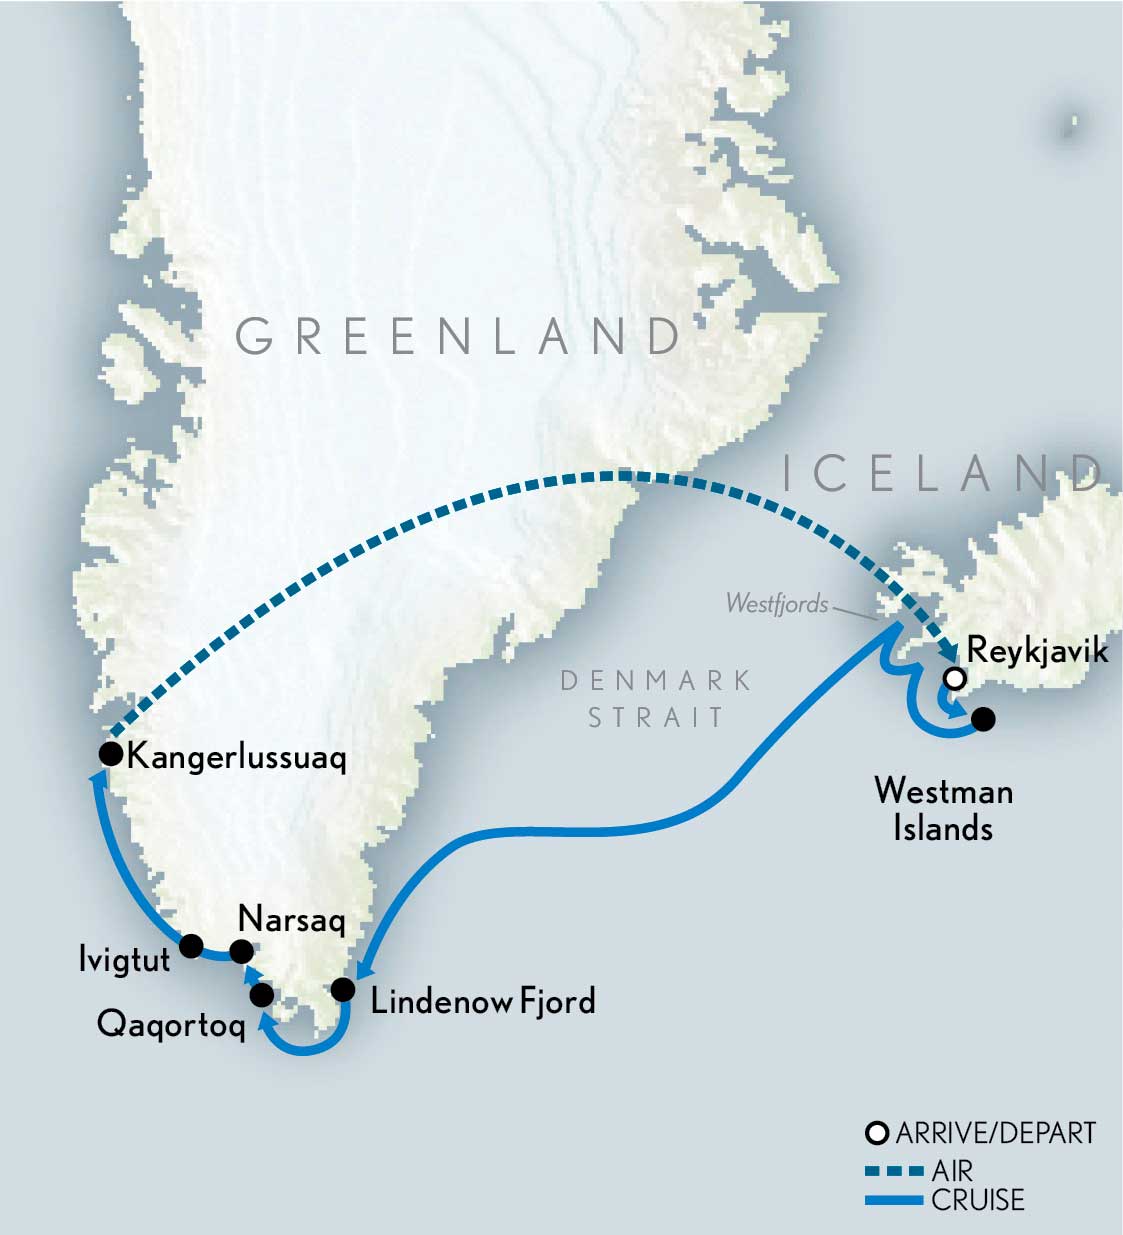 Iceland Greenland Cruise 2020 Abercrombie Kent